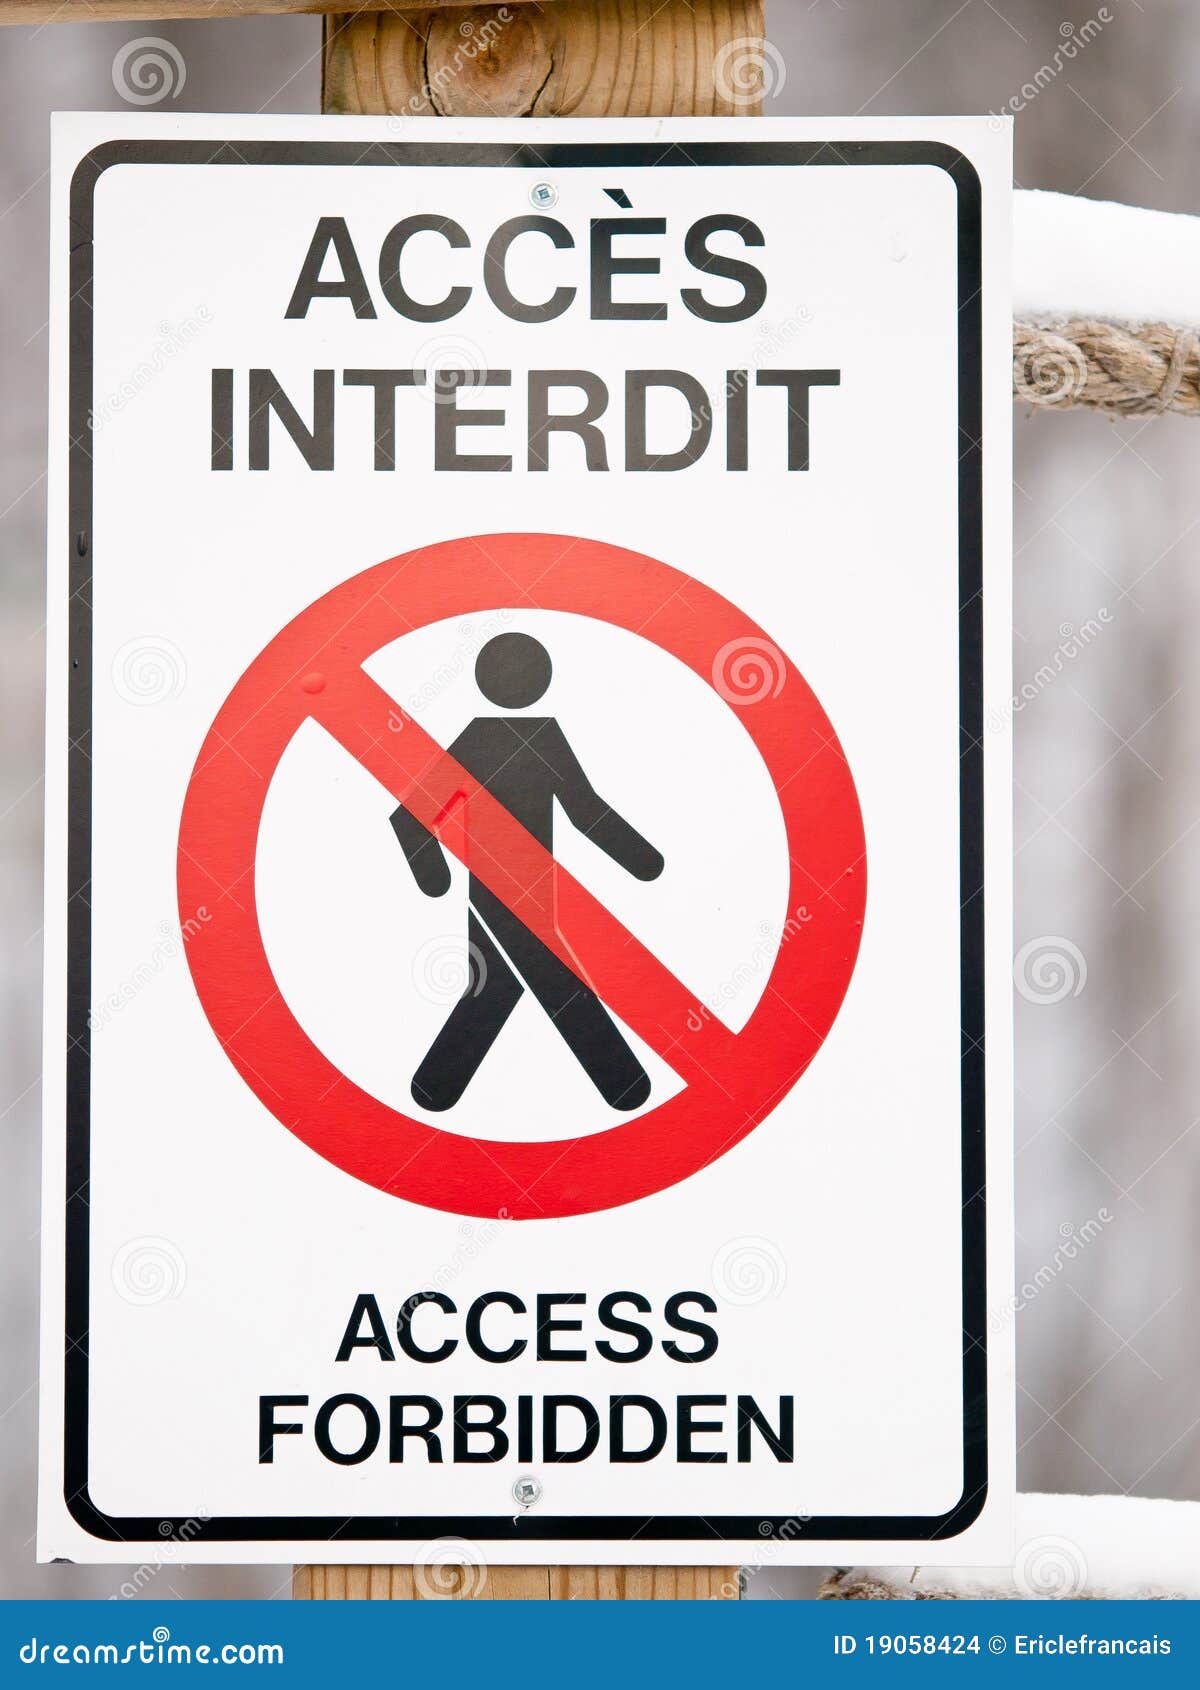 bilingual access forbiden sign